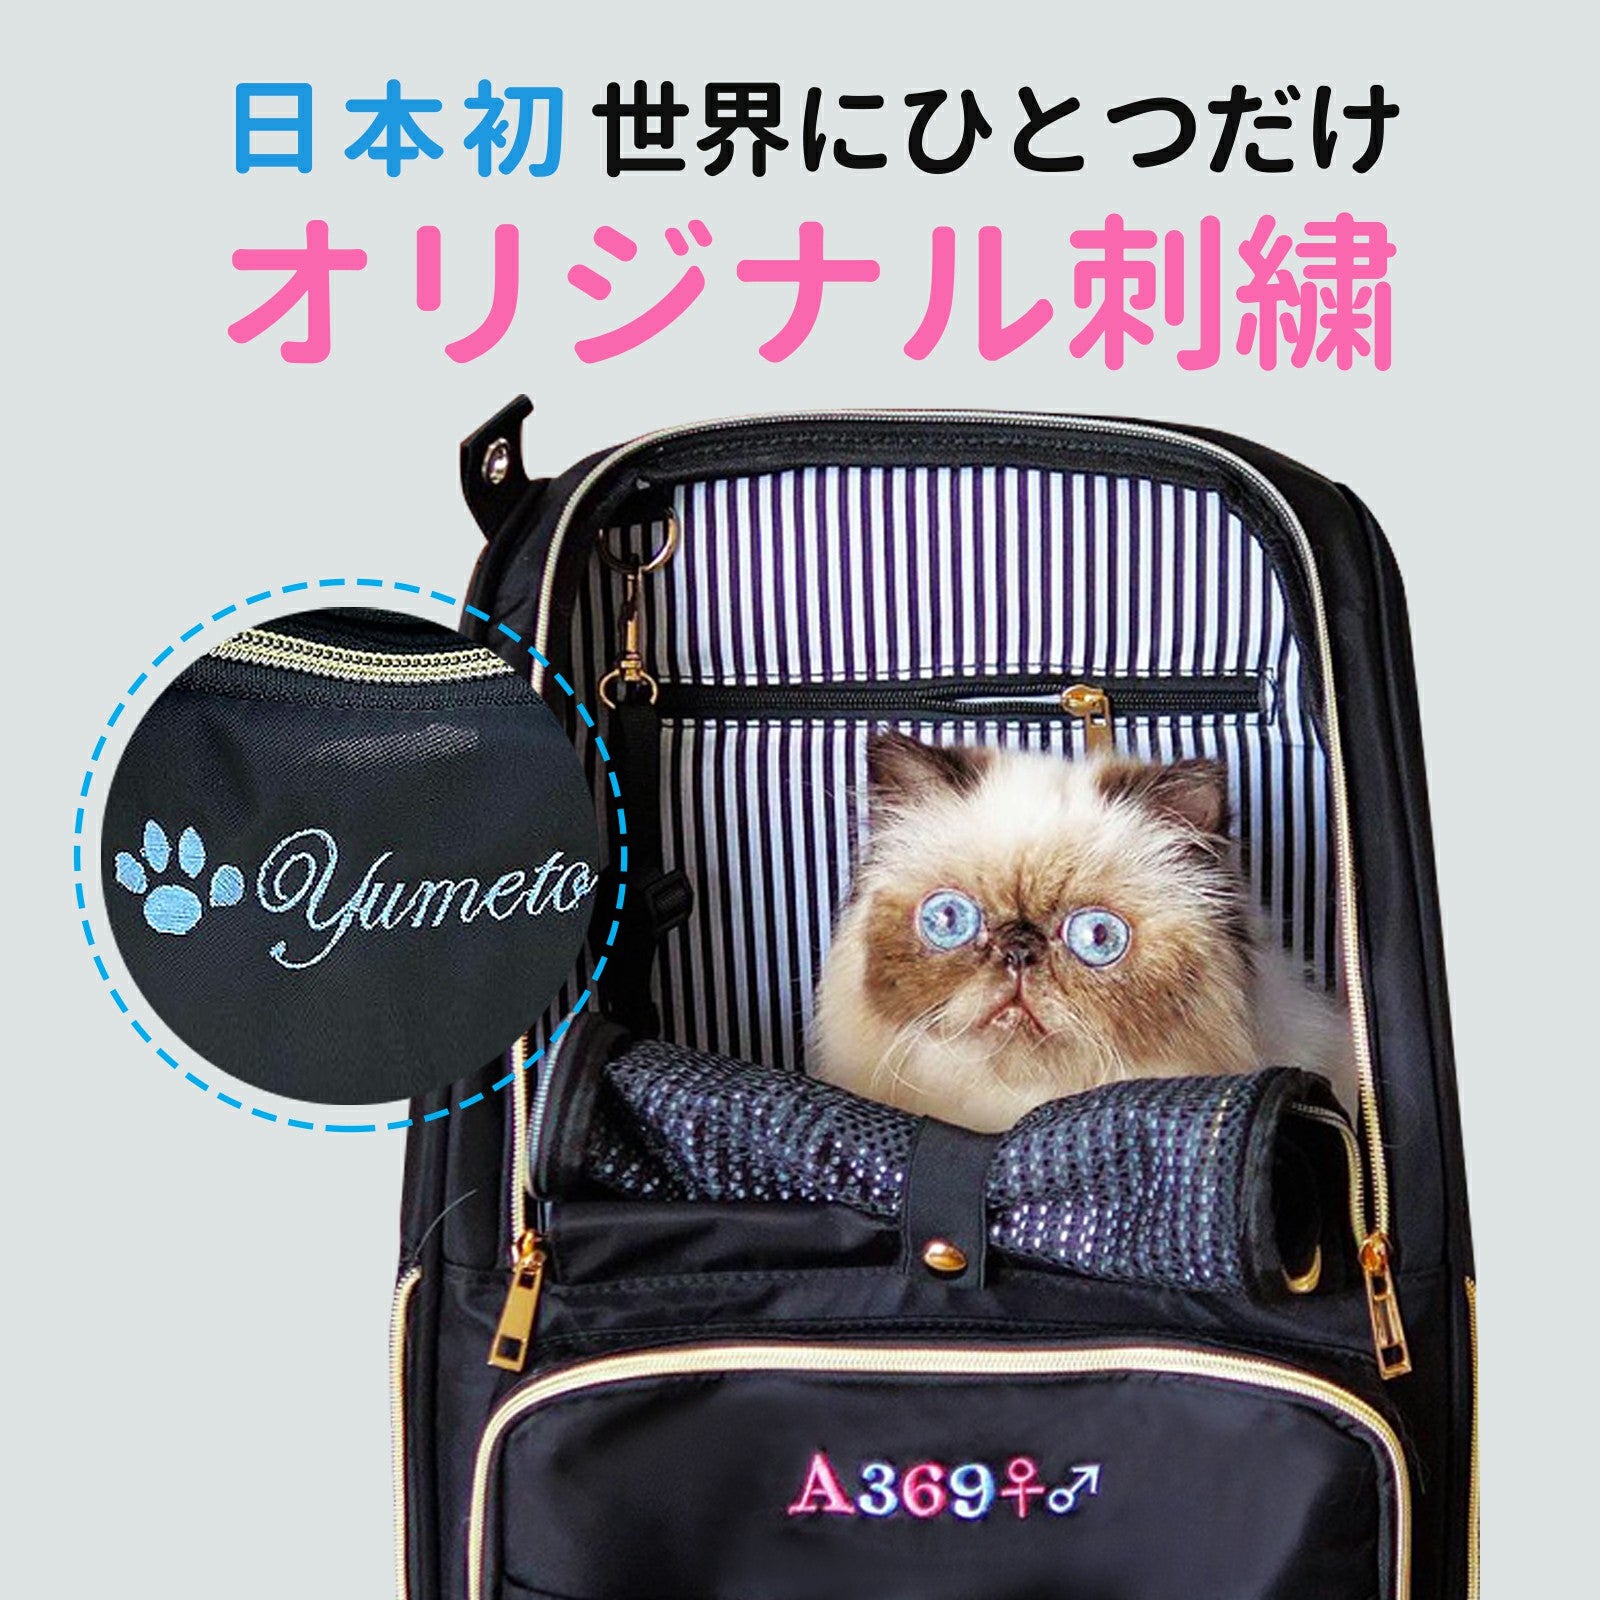 Winsun Japan日本初 ペットの名前刺繍入りキャリーバッグ専門店